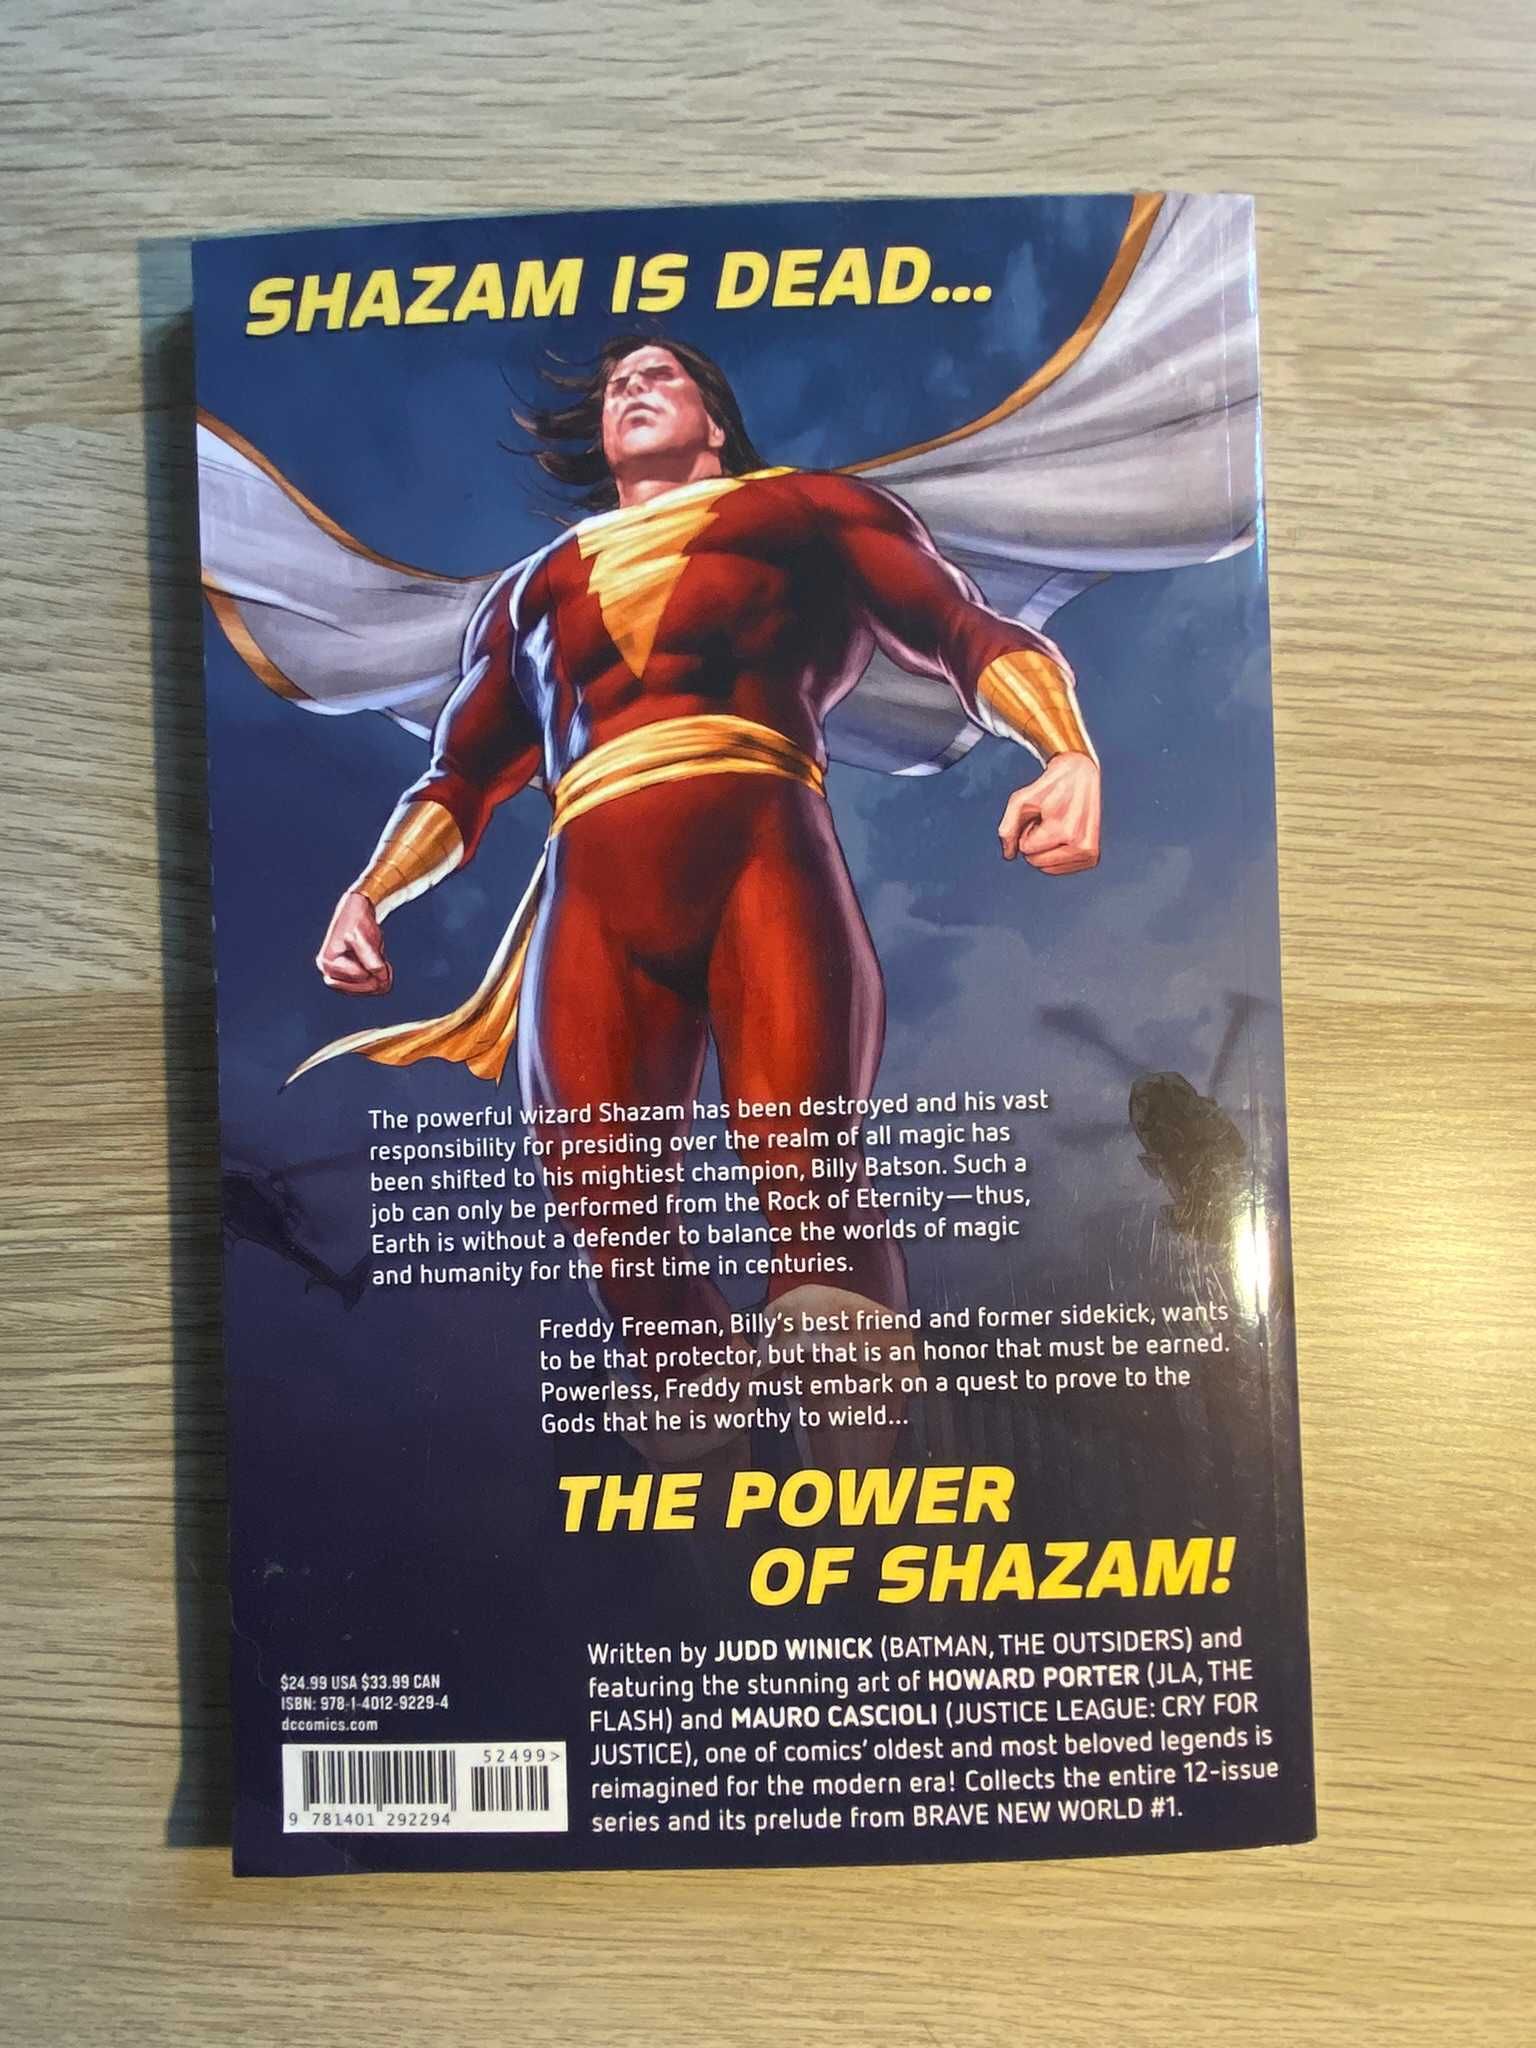 Trials of Shazam! Judd Winick, Howard Porter, Mauro Cascioli